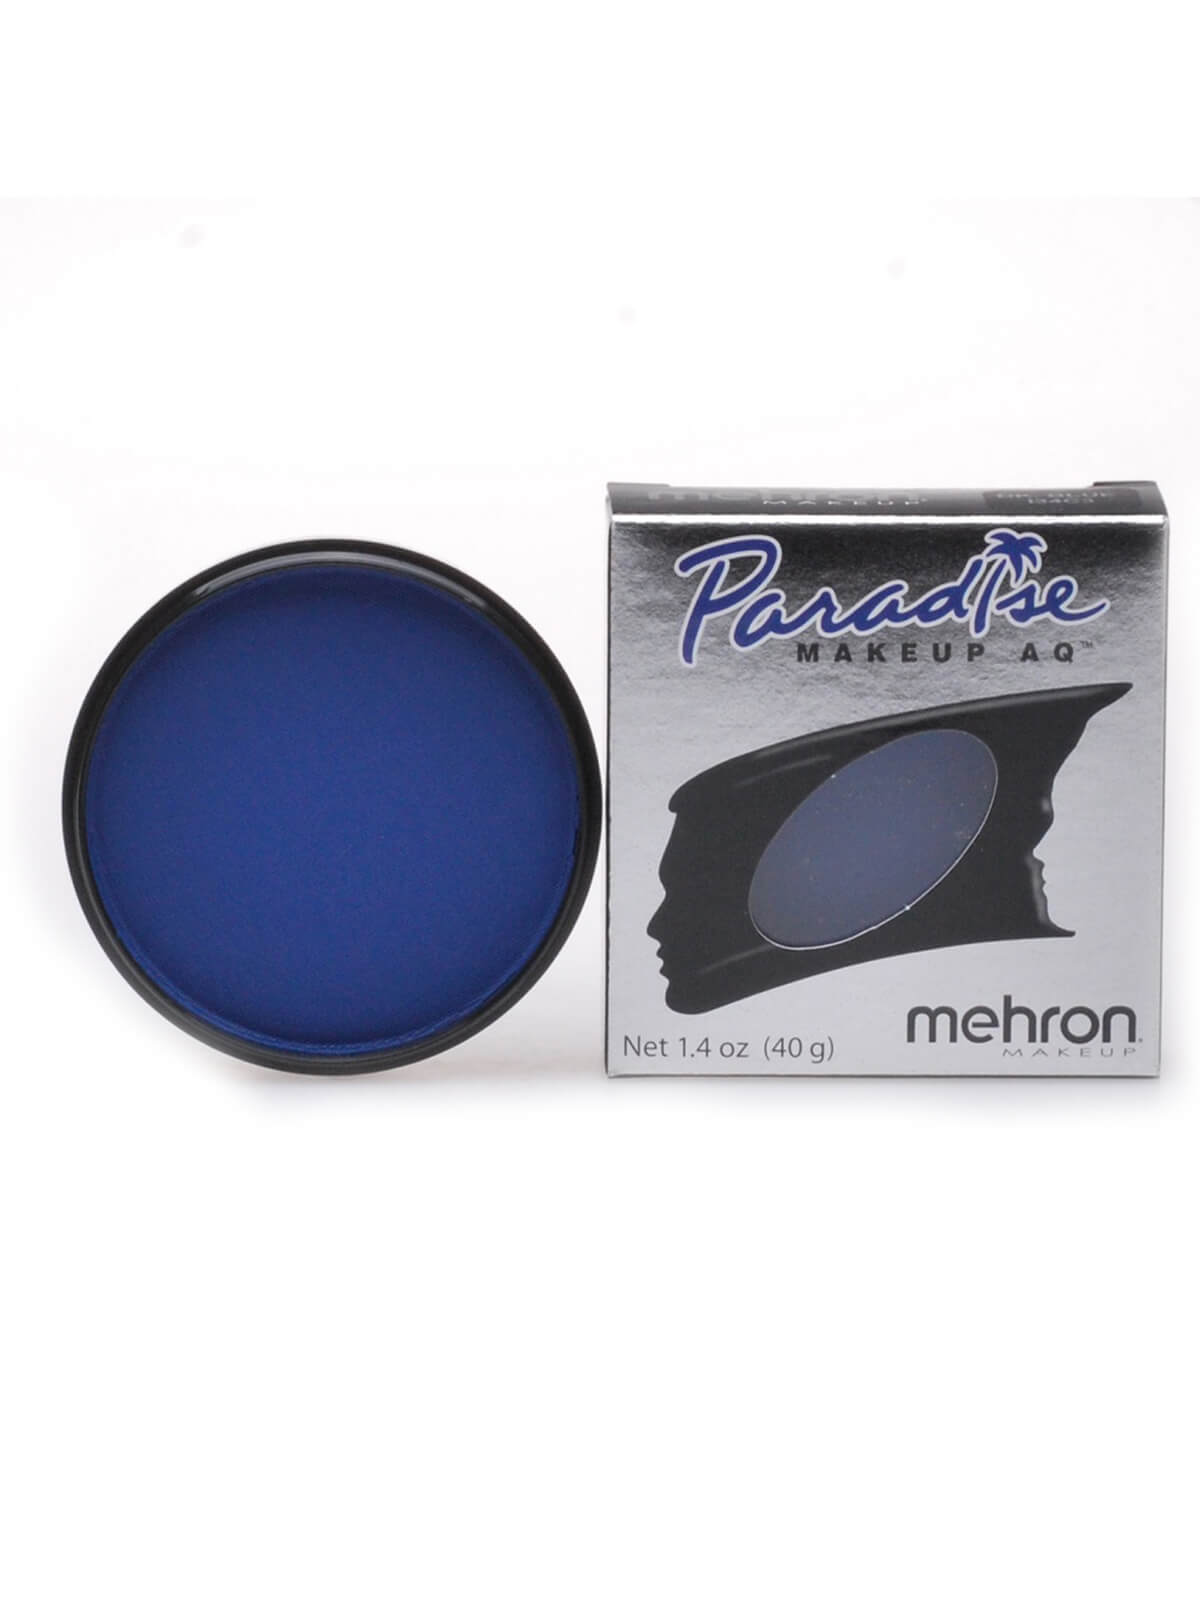 Mehron Paradise Makeup AQ - Basic -Dark Blue